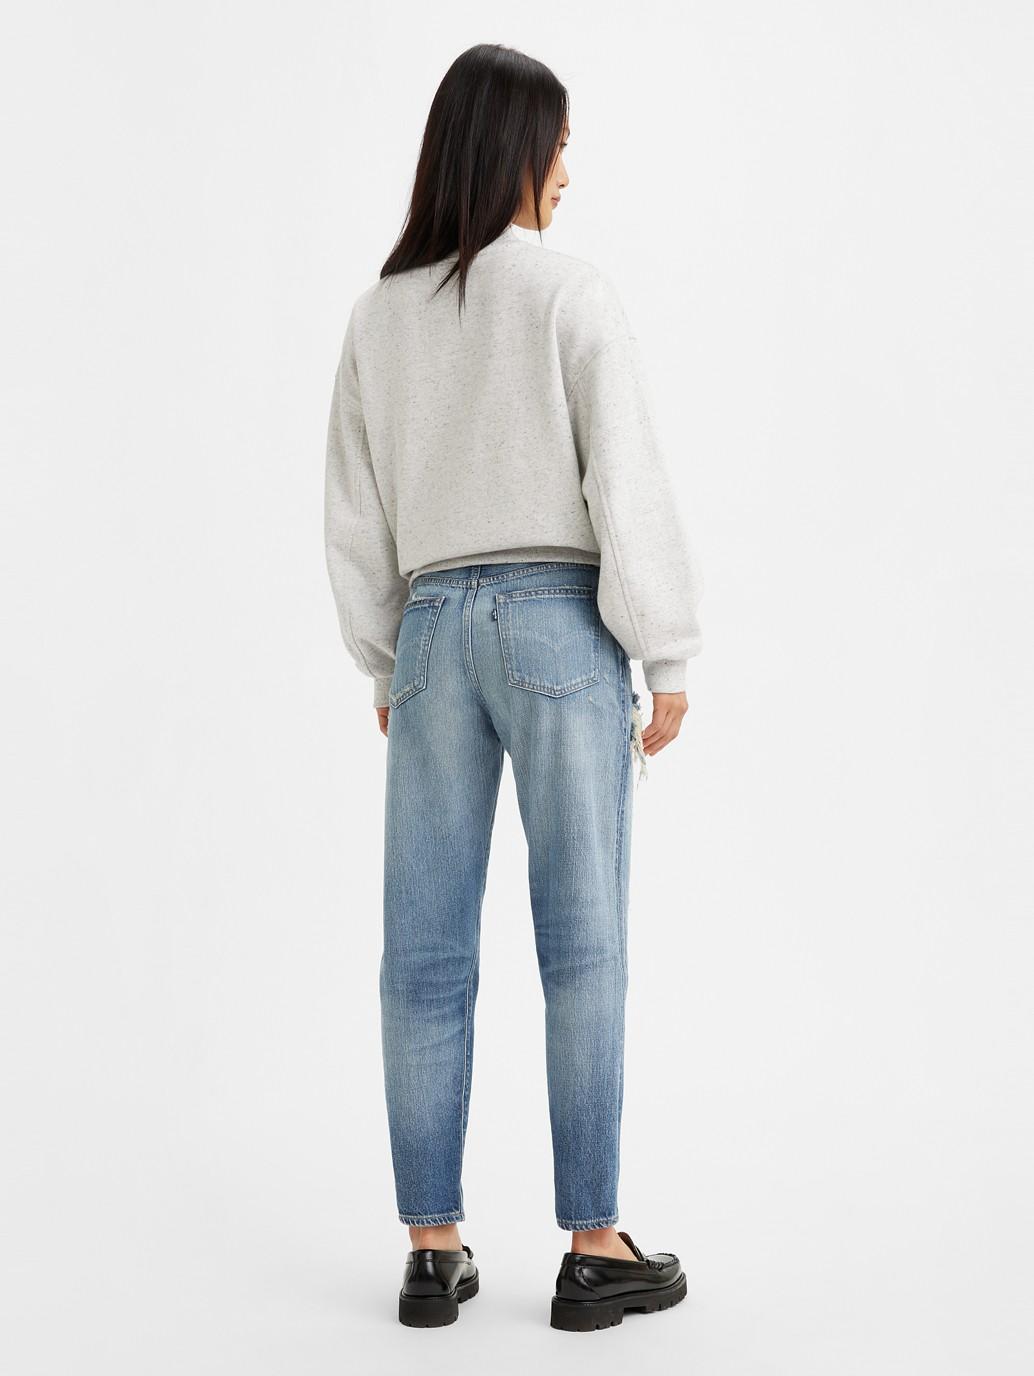 Buy Levi's® Made in Japan Women's High-Rise Boyfriend Jeans | Levi’s ...